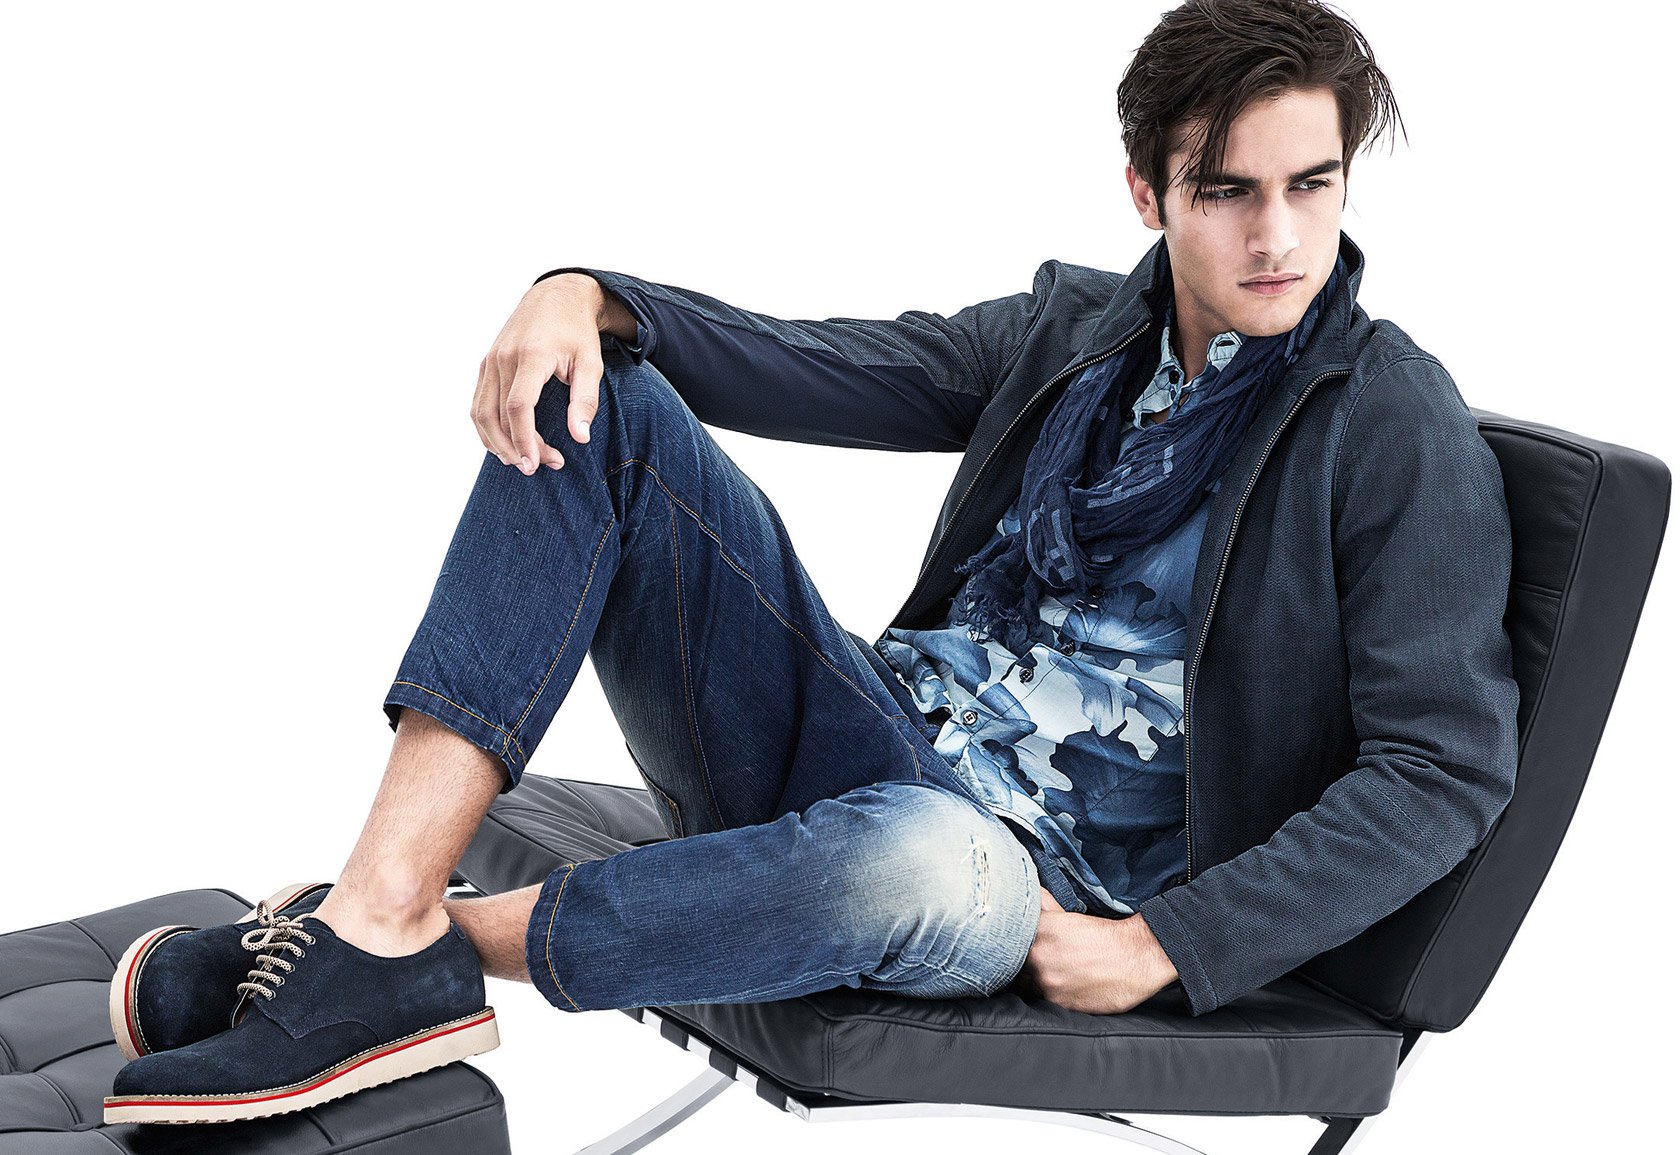 Сонник мужчины сидят. Armani Jeans 2015. Armani Jeans a869#. Одежда для мужчин. Стильная мужская одежда.